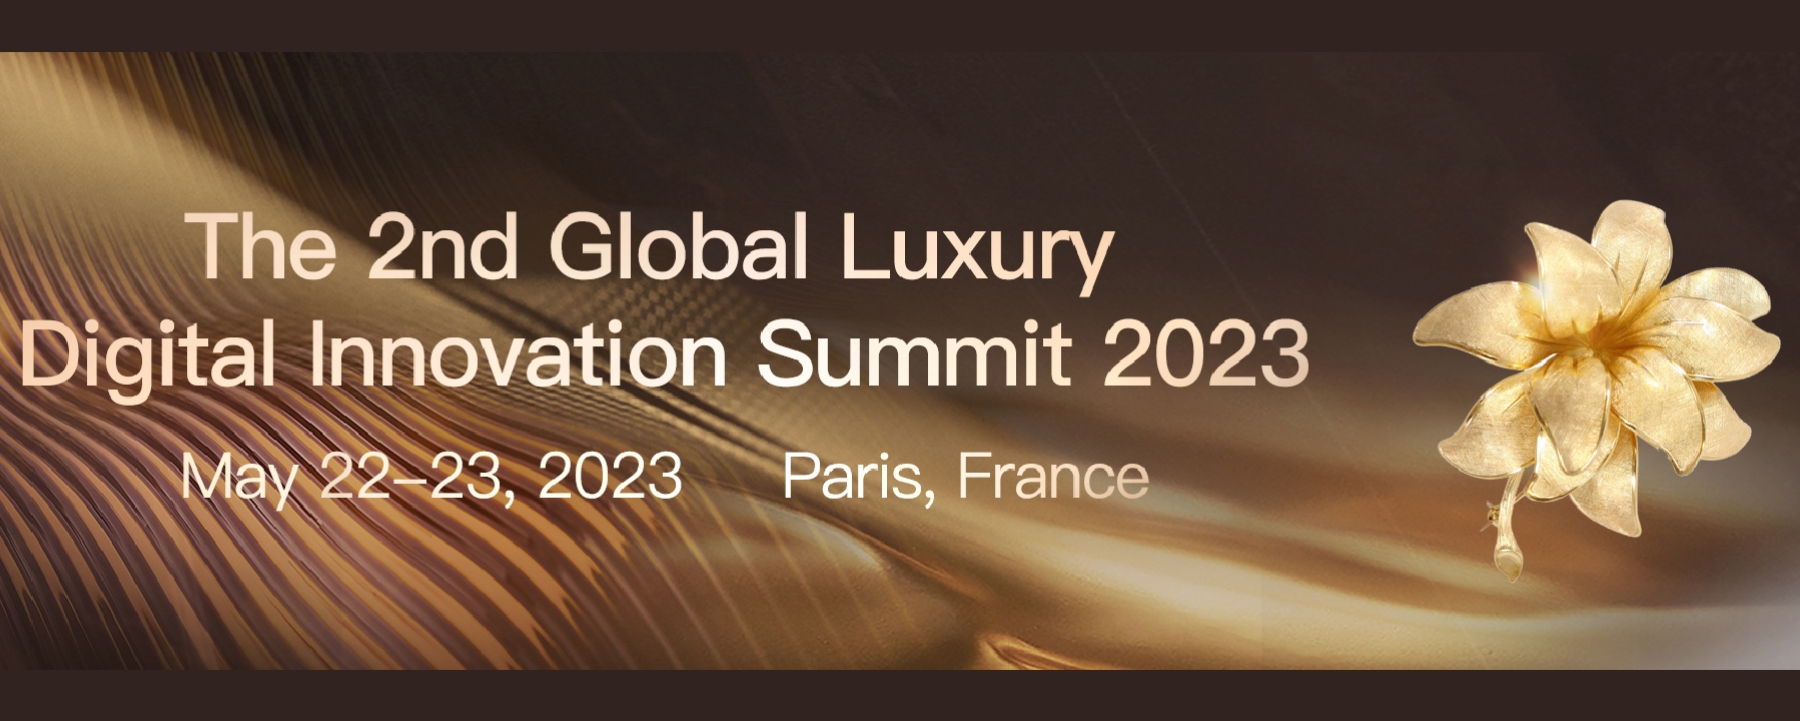 The 2nd Global Luxury Digital Innovation Summit 2023